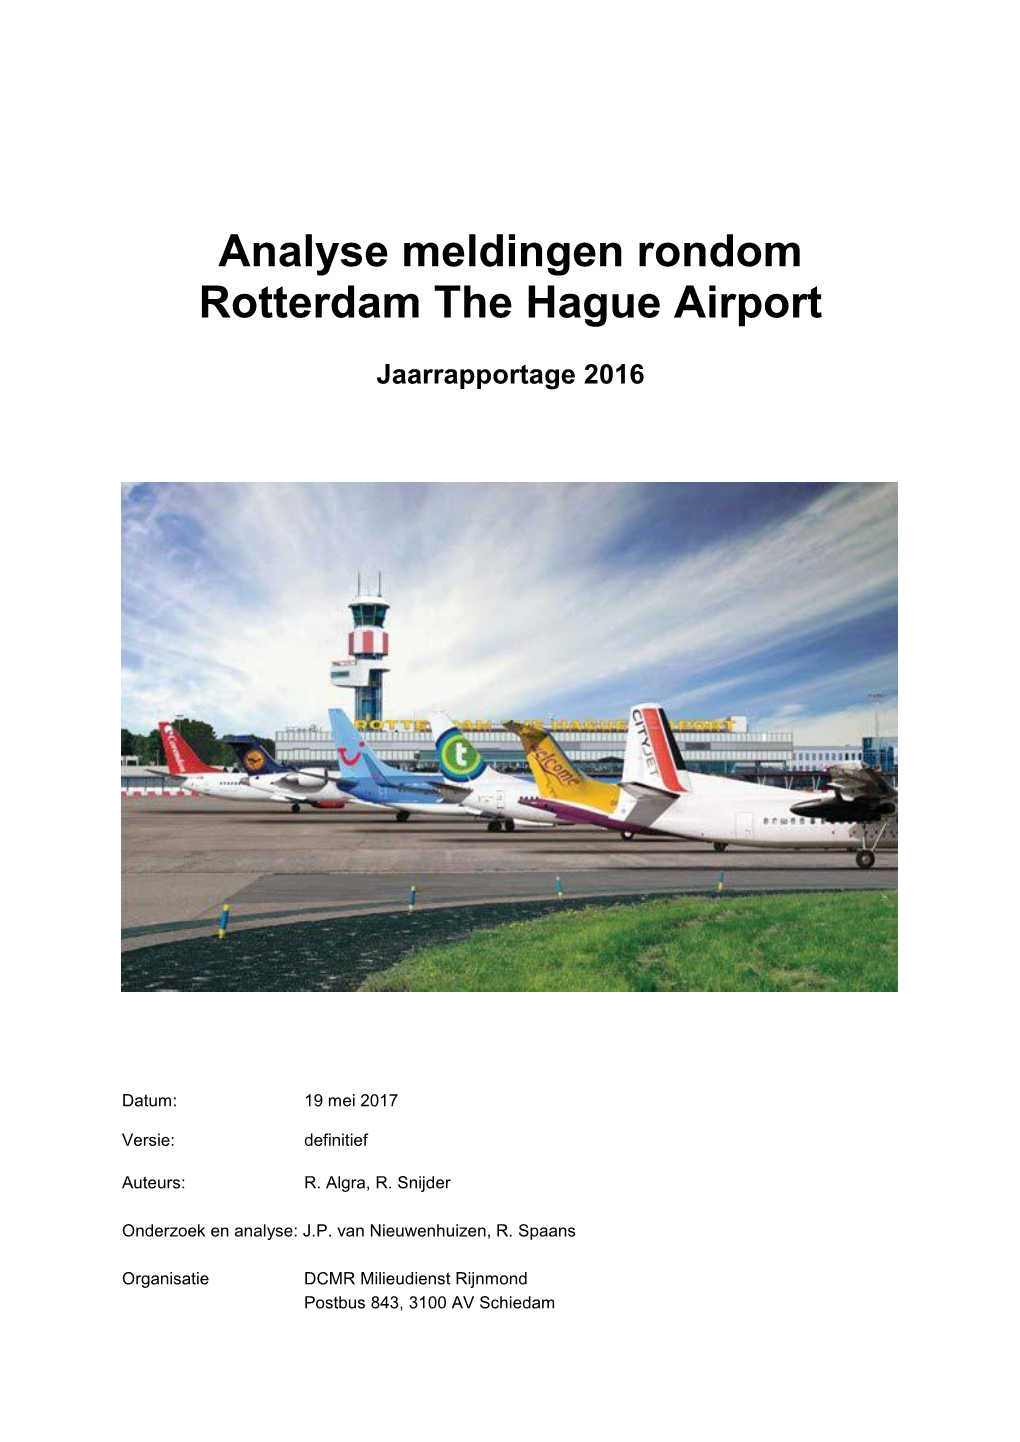 Analyse Meldingen Rondom Rotterdam the Hague Airport